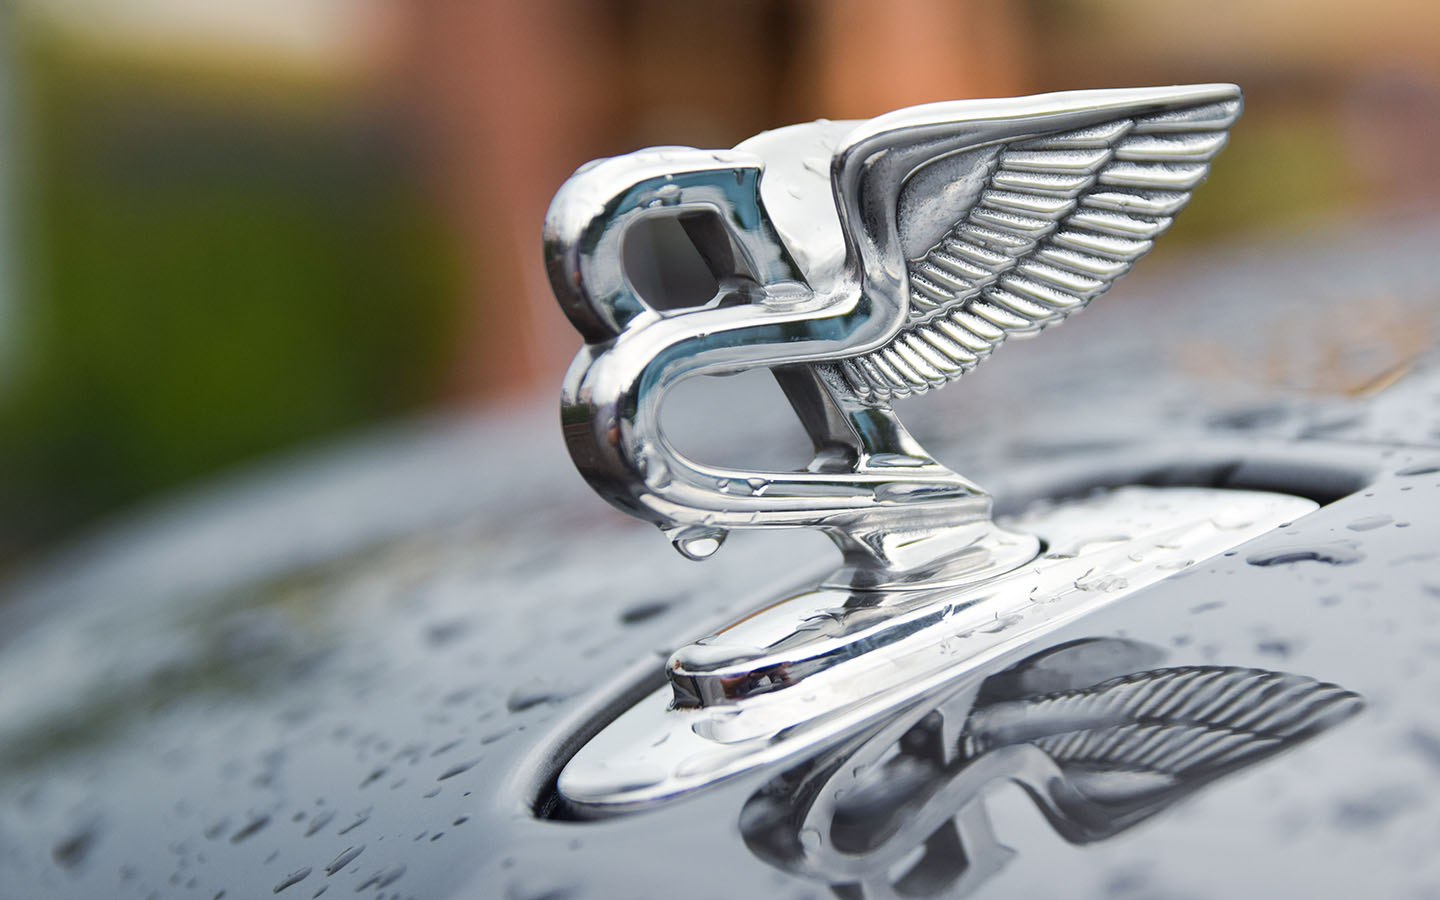 Bentley logo - Bentley Symbol Meaning And History - Car Logos